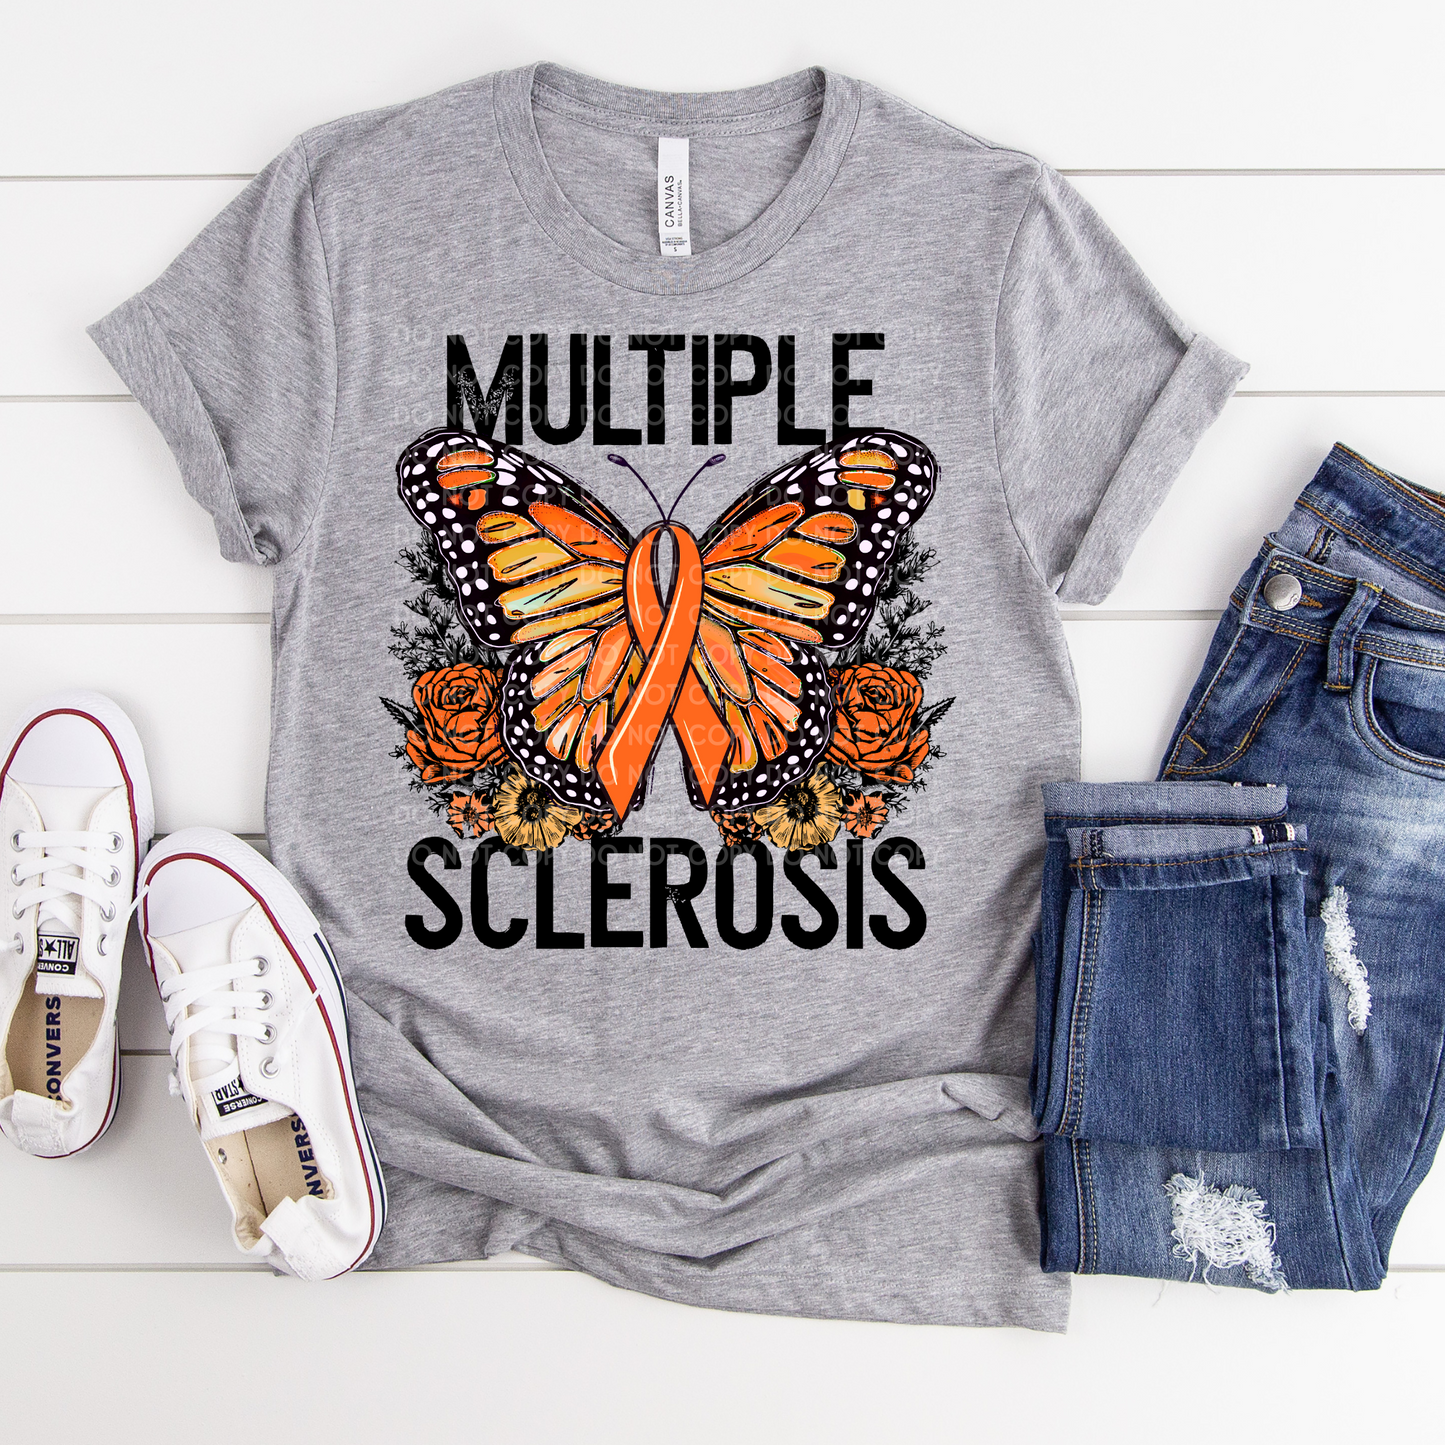 Multiple Sclerosis - DTF TRANSFER